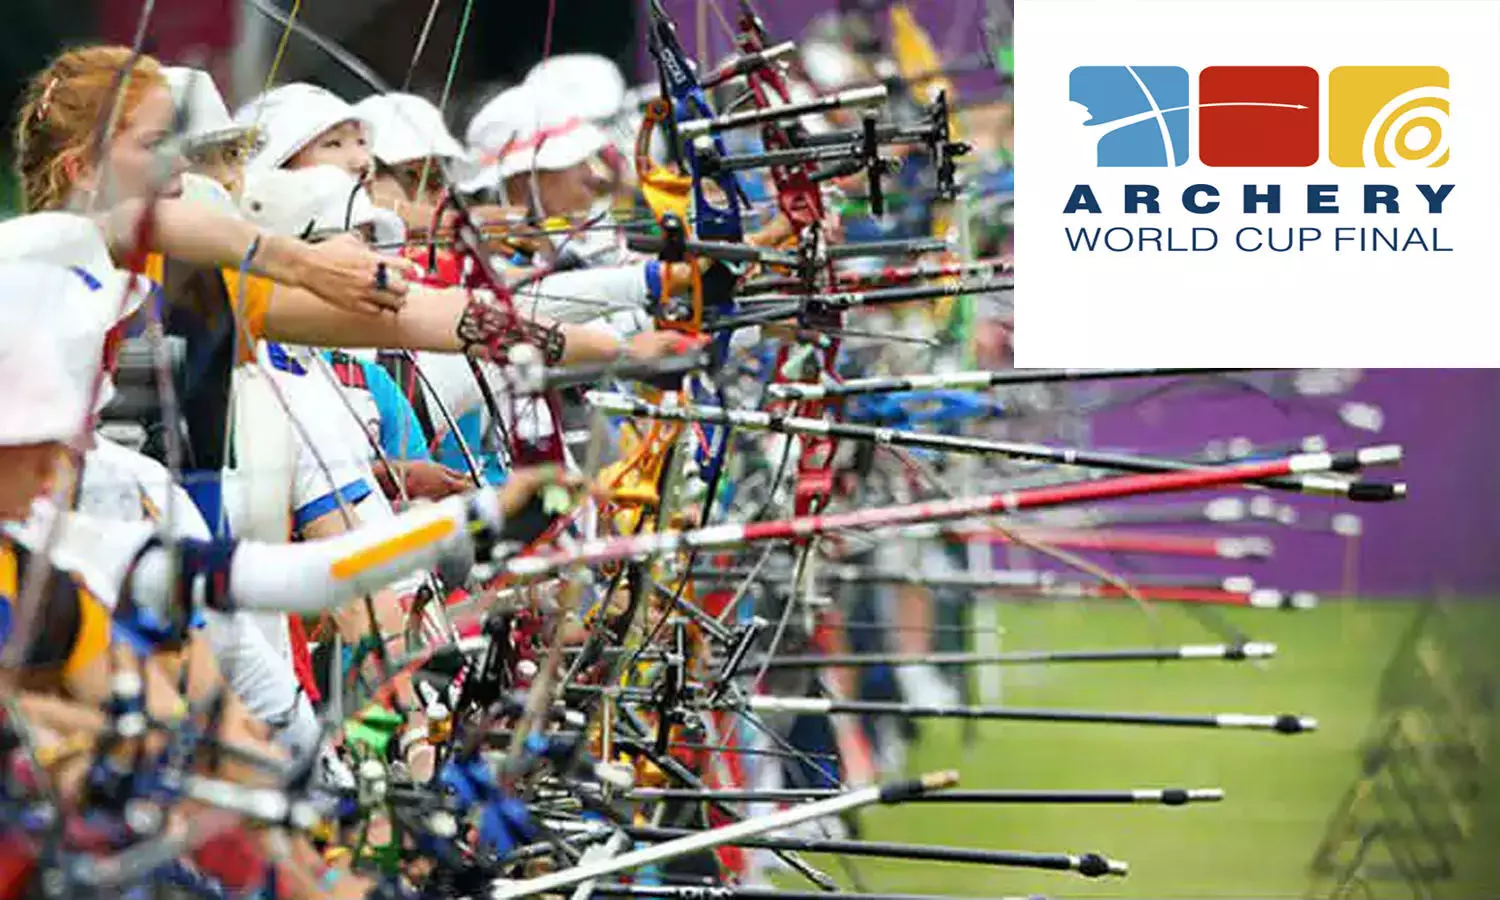 Archery World Cup Final 2021